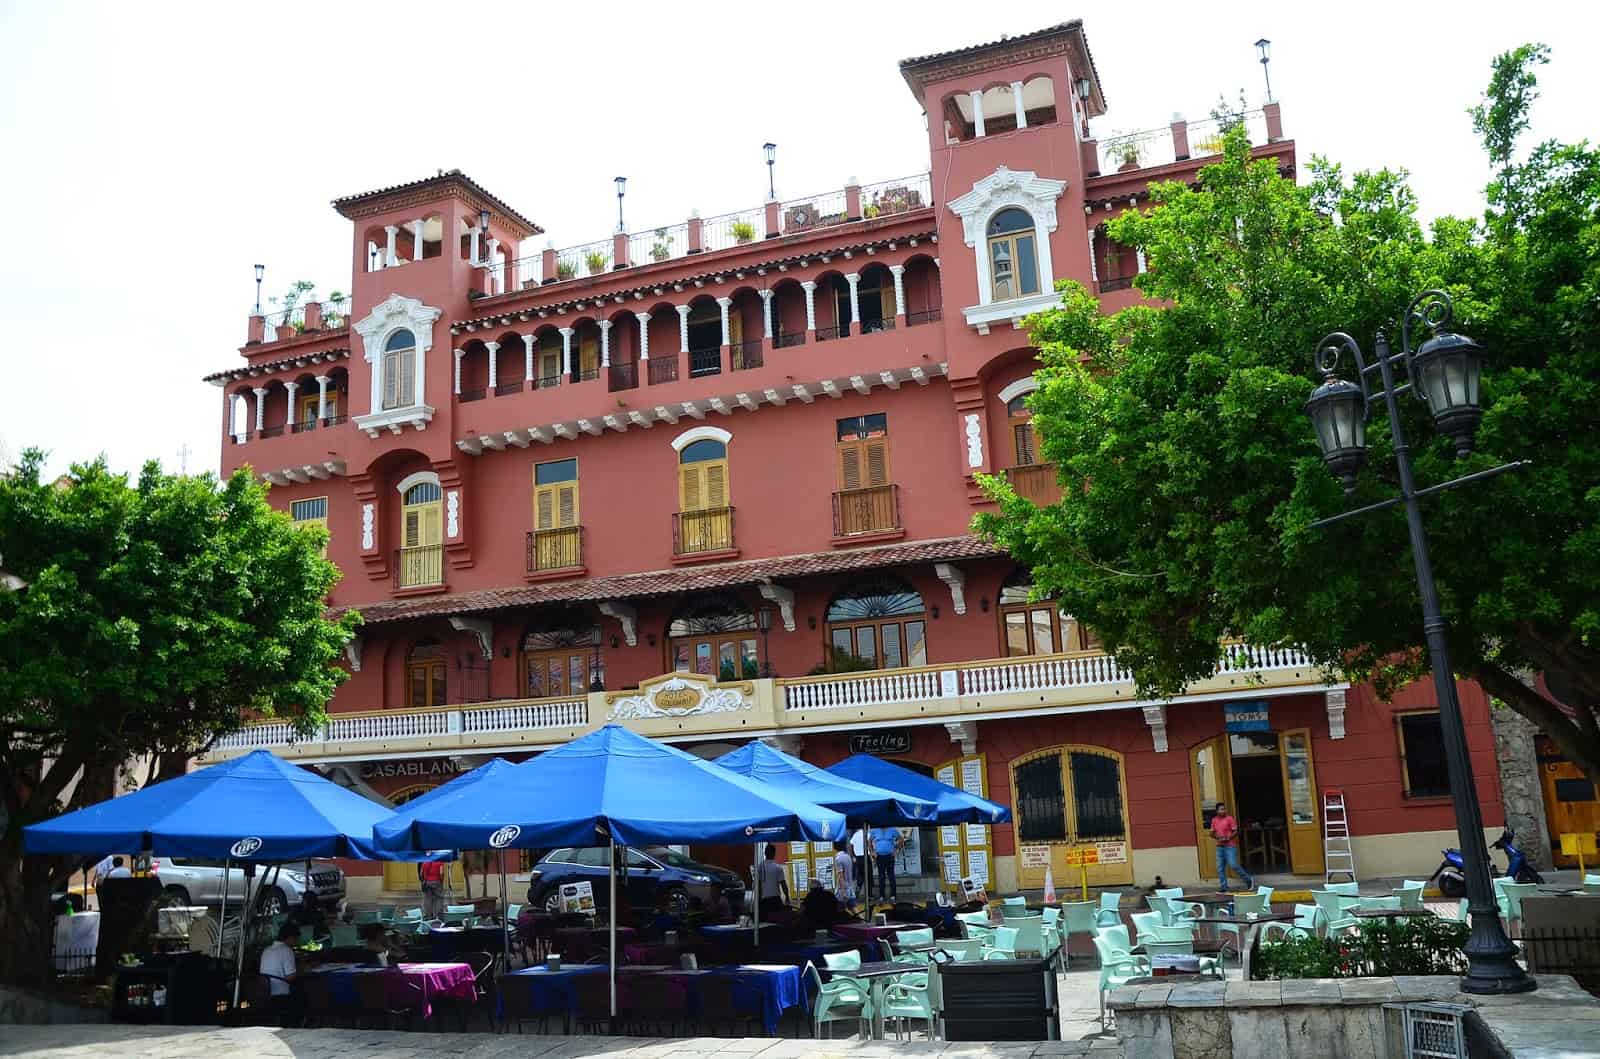 Plaza Bolívar in Casco Viejo, Panama City